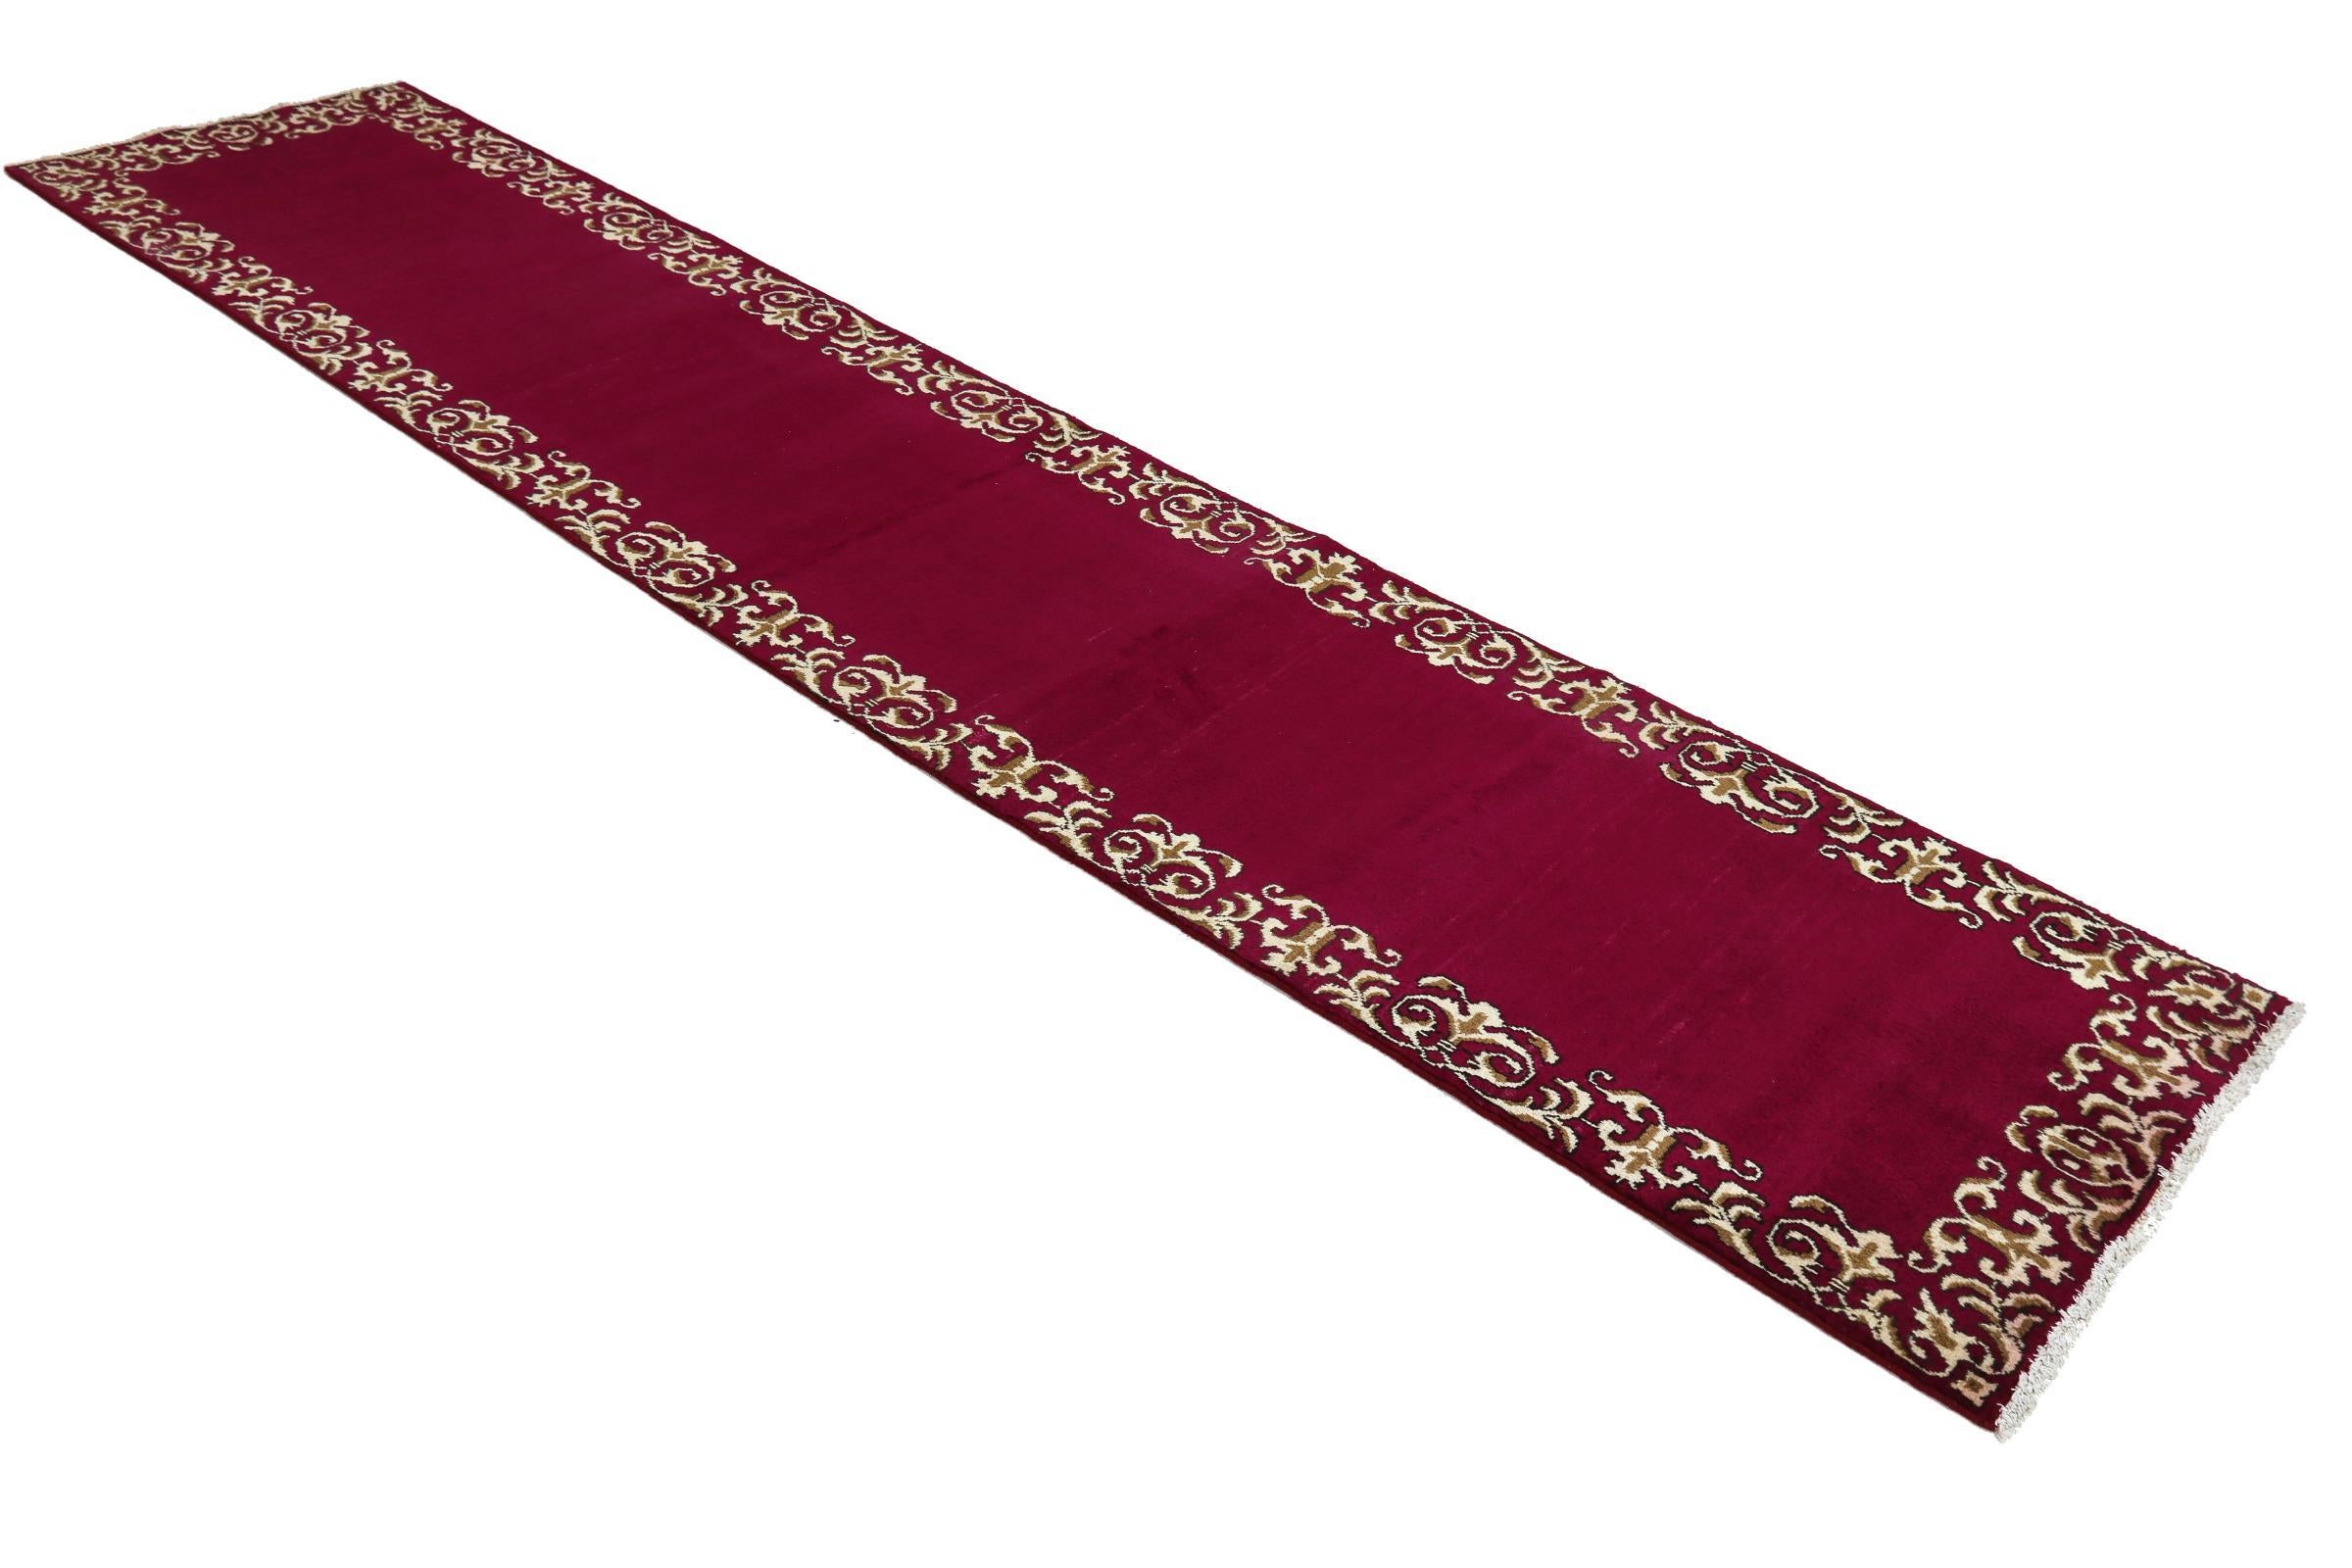 A beautiful Persian rug, Tabriz, 20th century

Size: 384 x 78cm
Thickness: ap. 10 mm
Knot density: 90 000 / m² 
Pile: Handspun wool
Warp: Cotton
Condition/maintenance: Perfect 
Weight: ap. 10.00 kg.